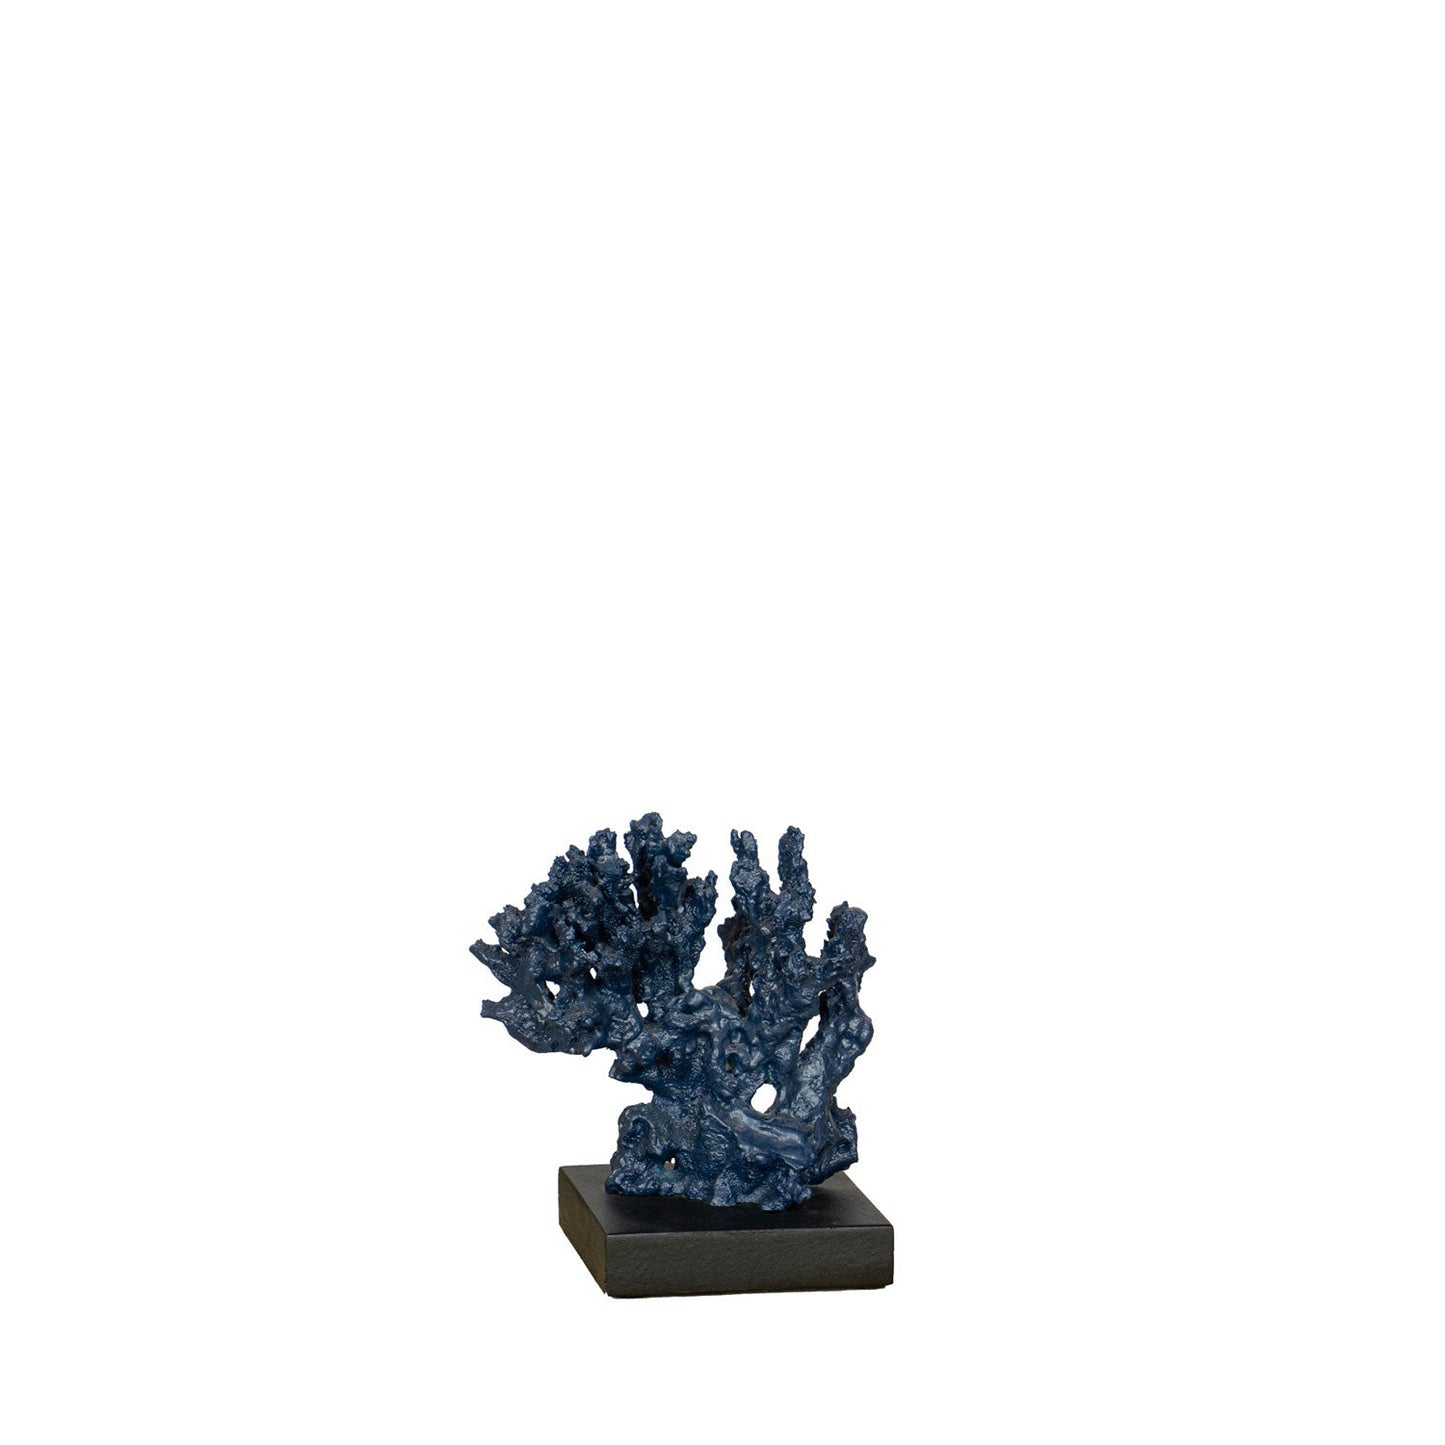 Homedock Escultura Noronha 14 cm - Azul c/ Marrom Devitro